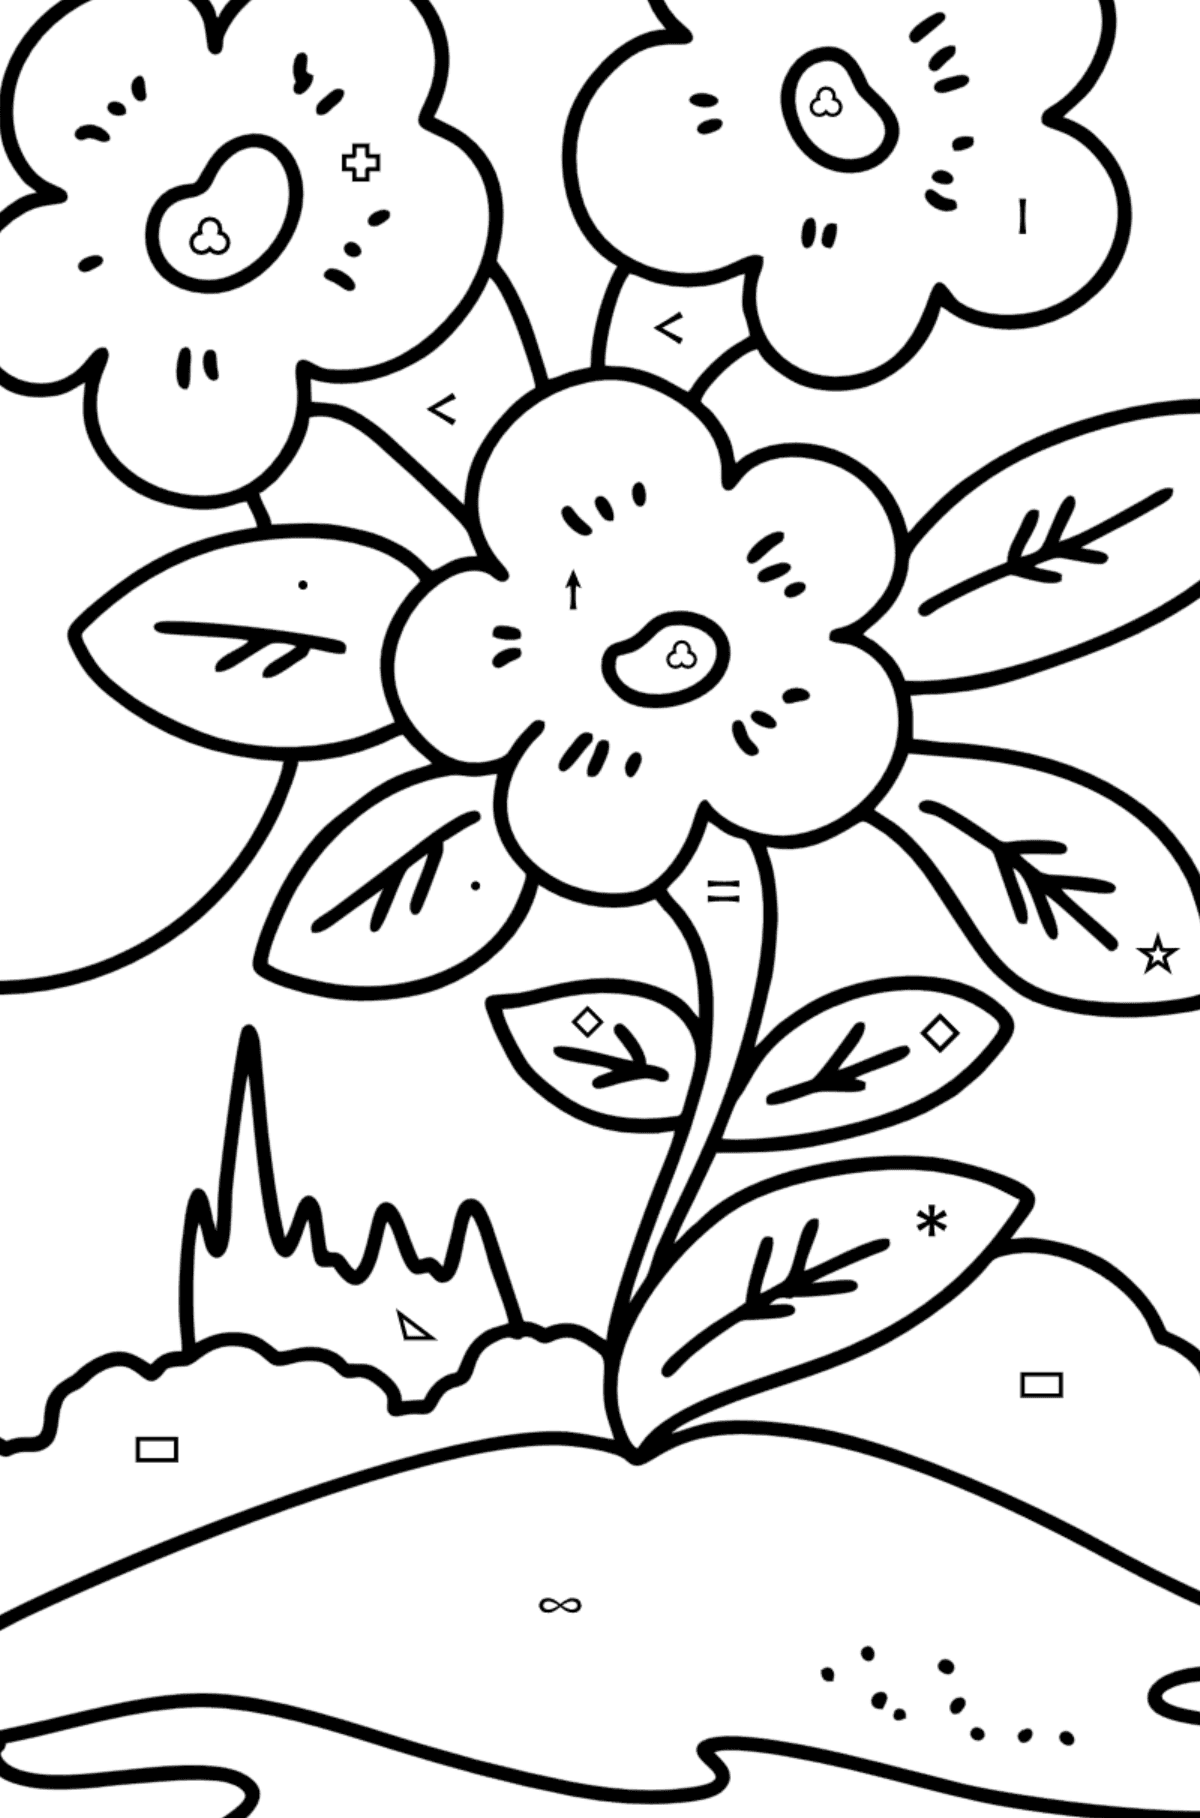 Mewarnai gambar bunga musim semi yang lucu - Pewarnaan mengikuti Simbol dan Bentuk Geometri untuk anak-anak